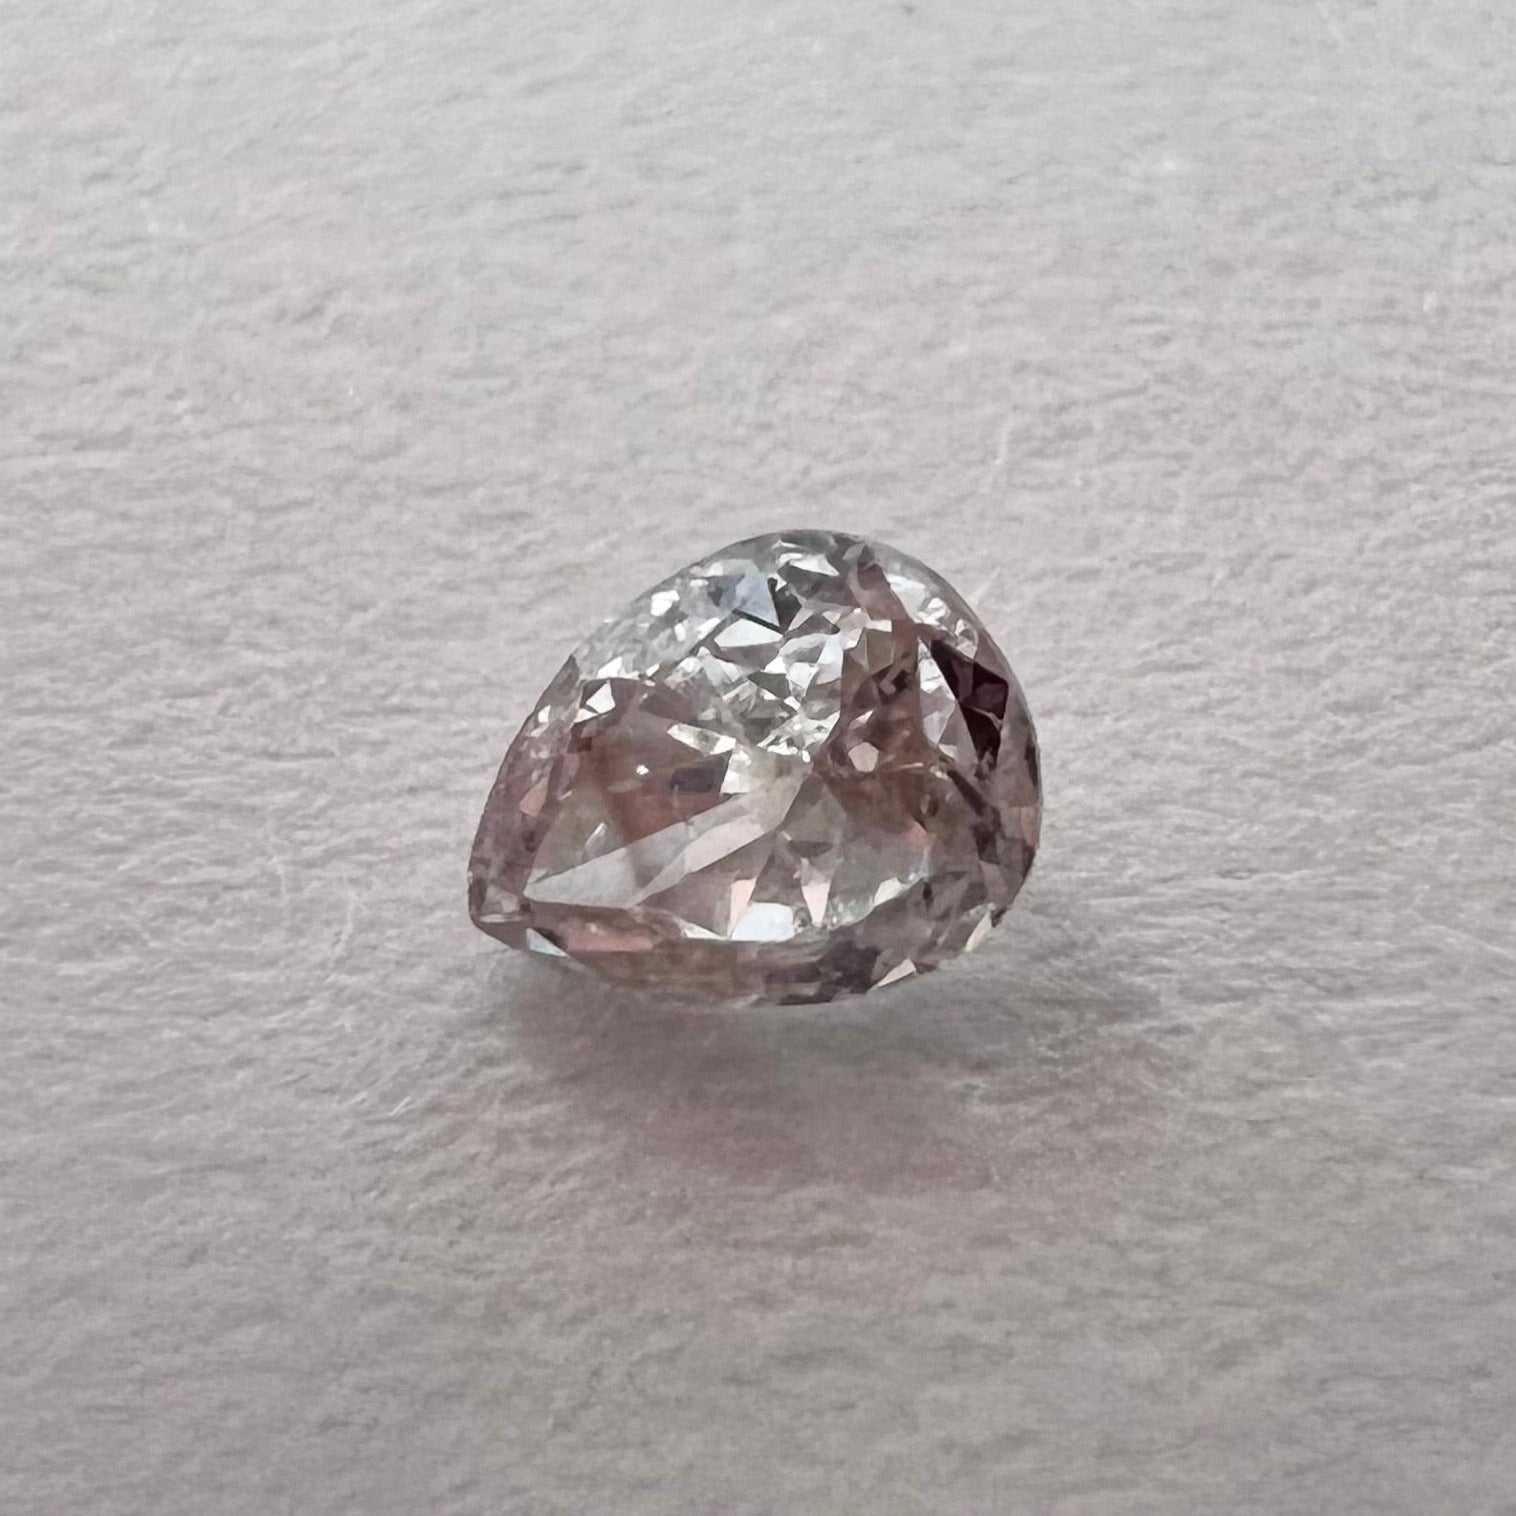 .11CT Pear Diamond Light Pinkish Brown Vs1 3.12x2.46x1.74mm Natural Earth mined